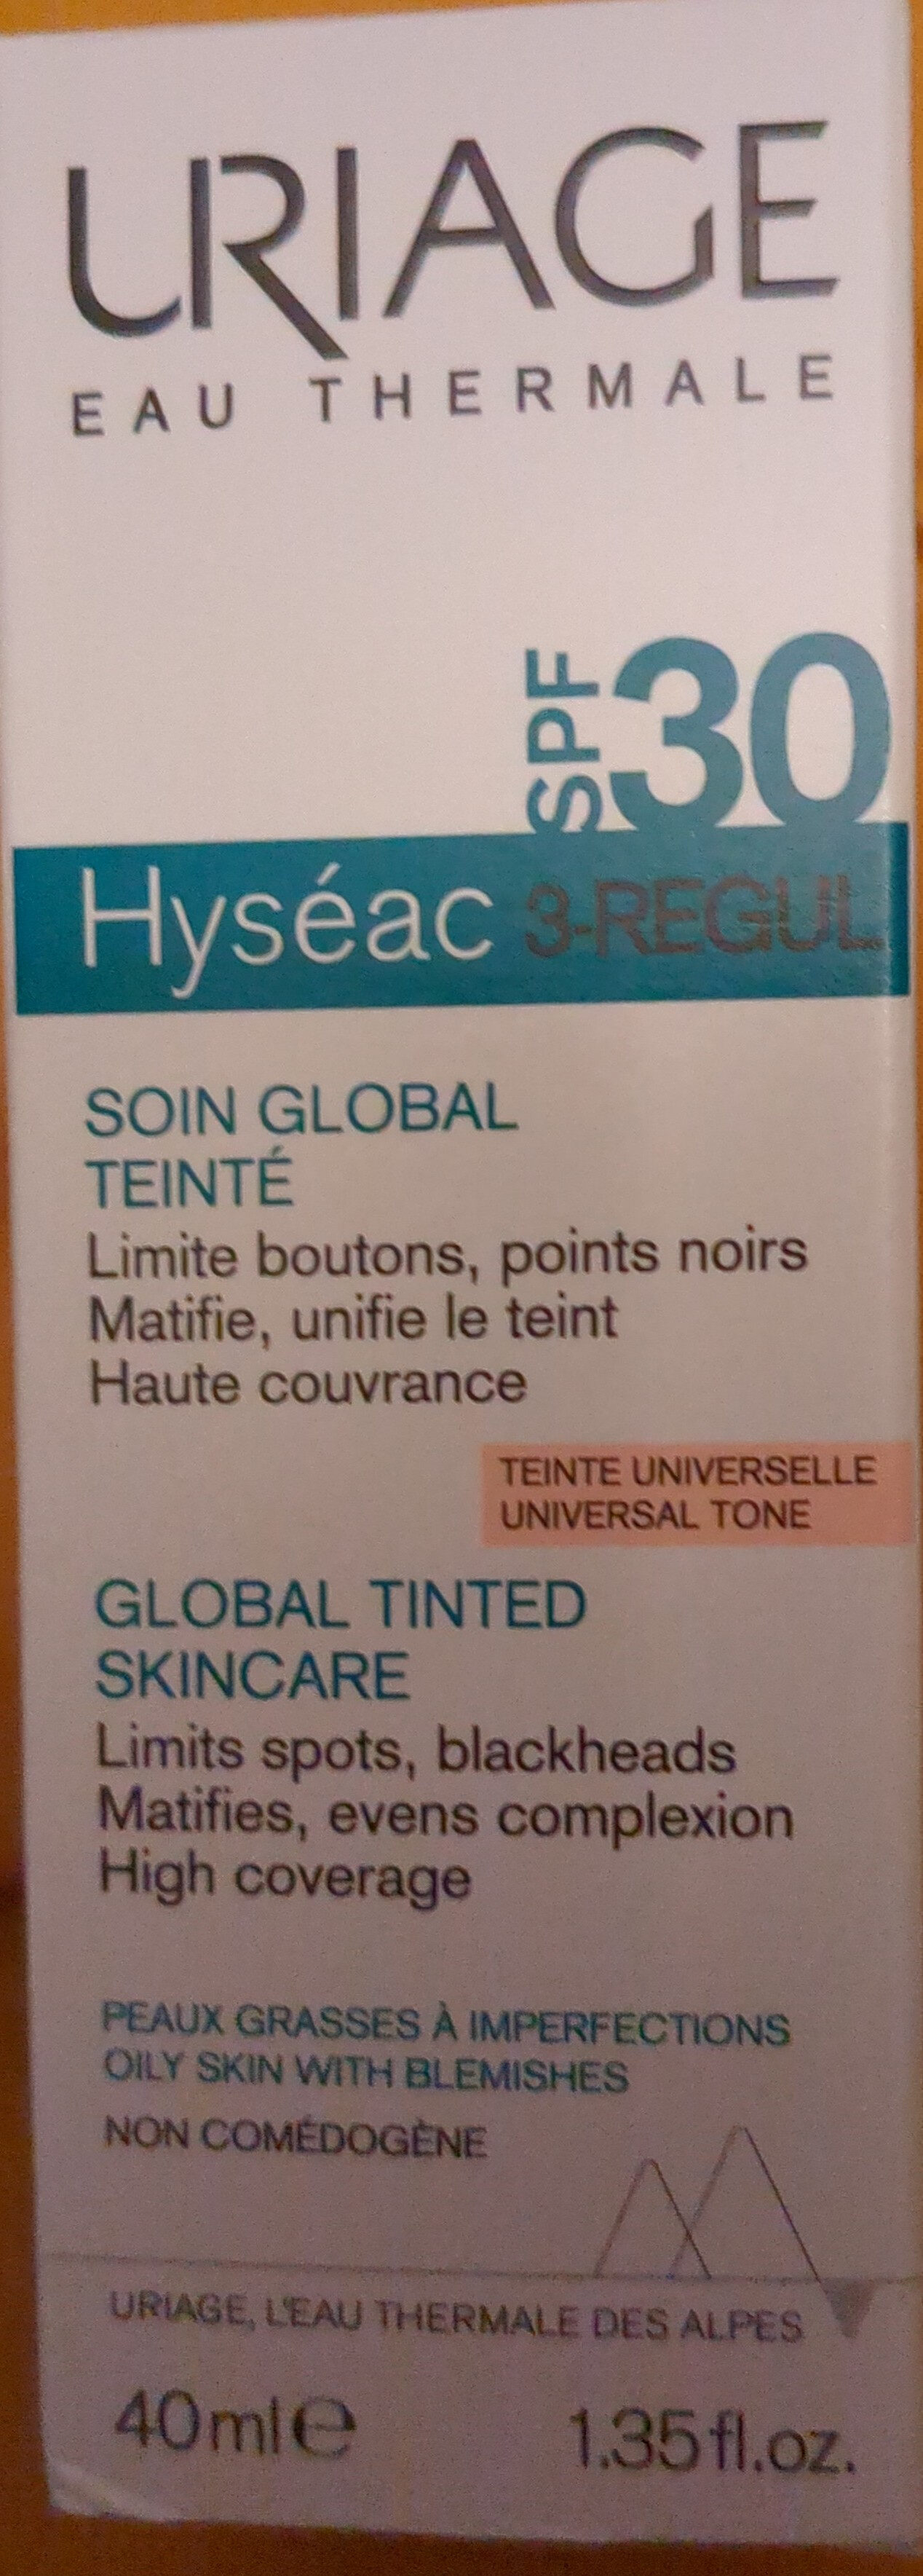 Hyséac 3-REGUL SPF30 - نتاج - fr